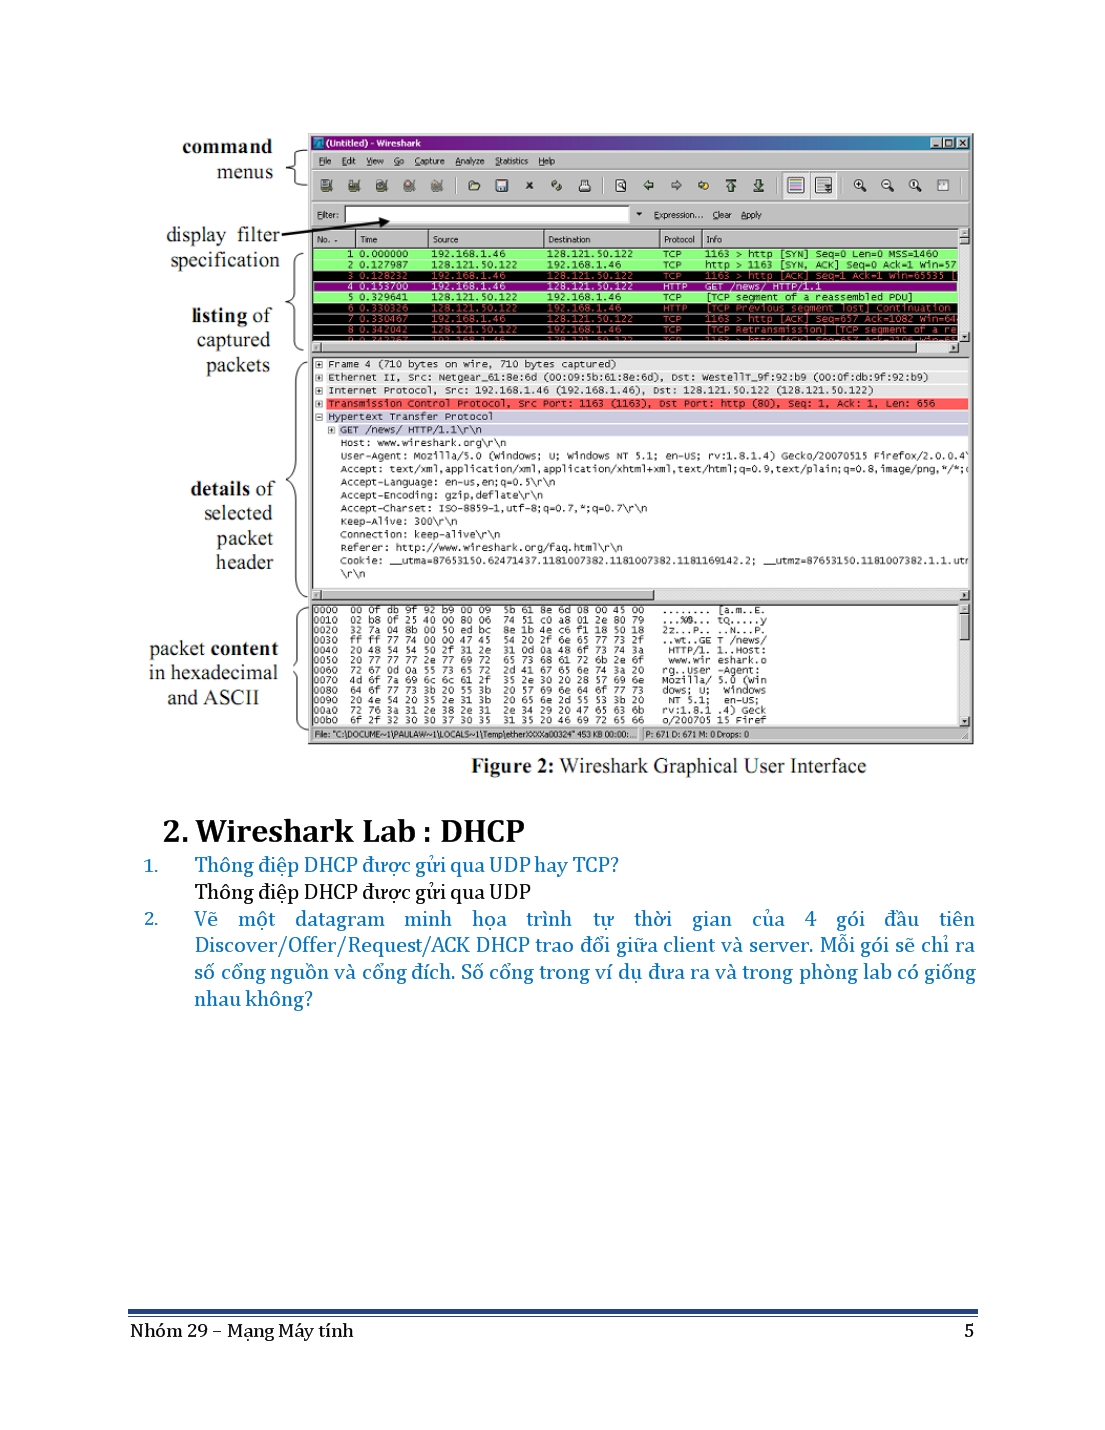 Wireshark trang 5